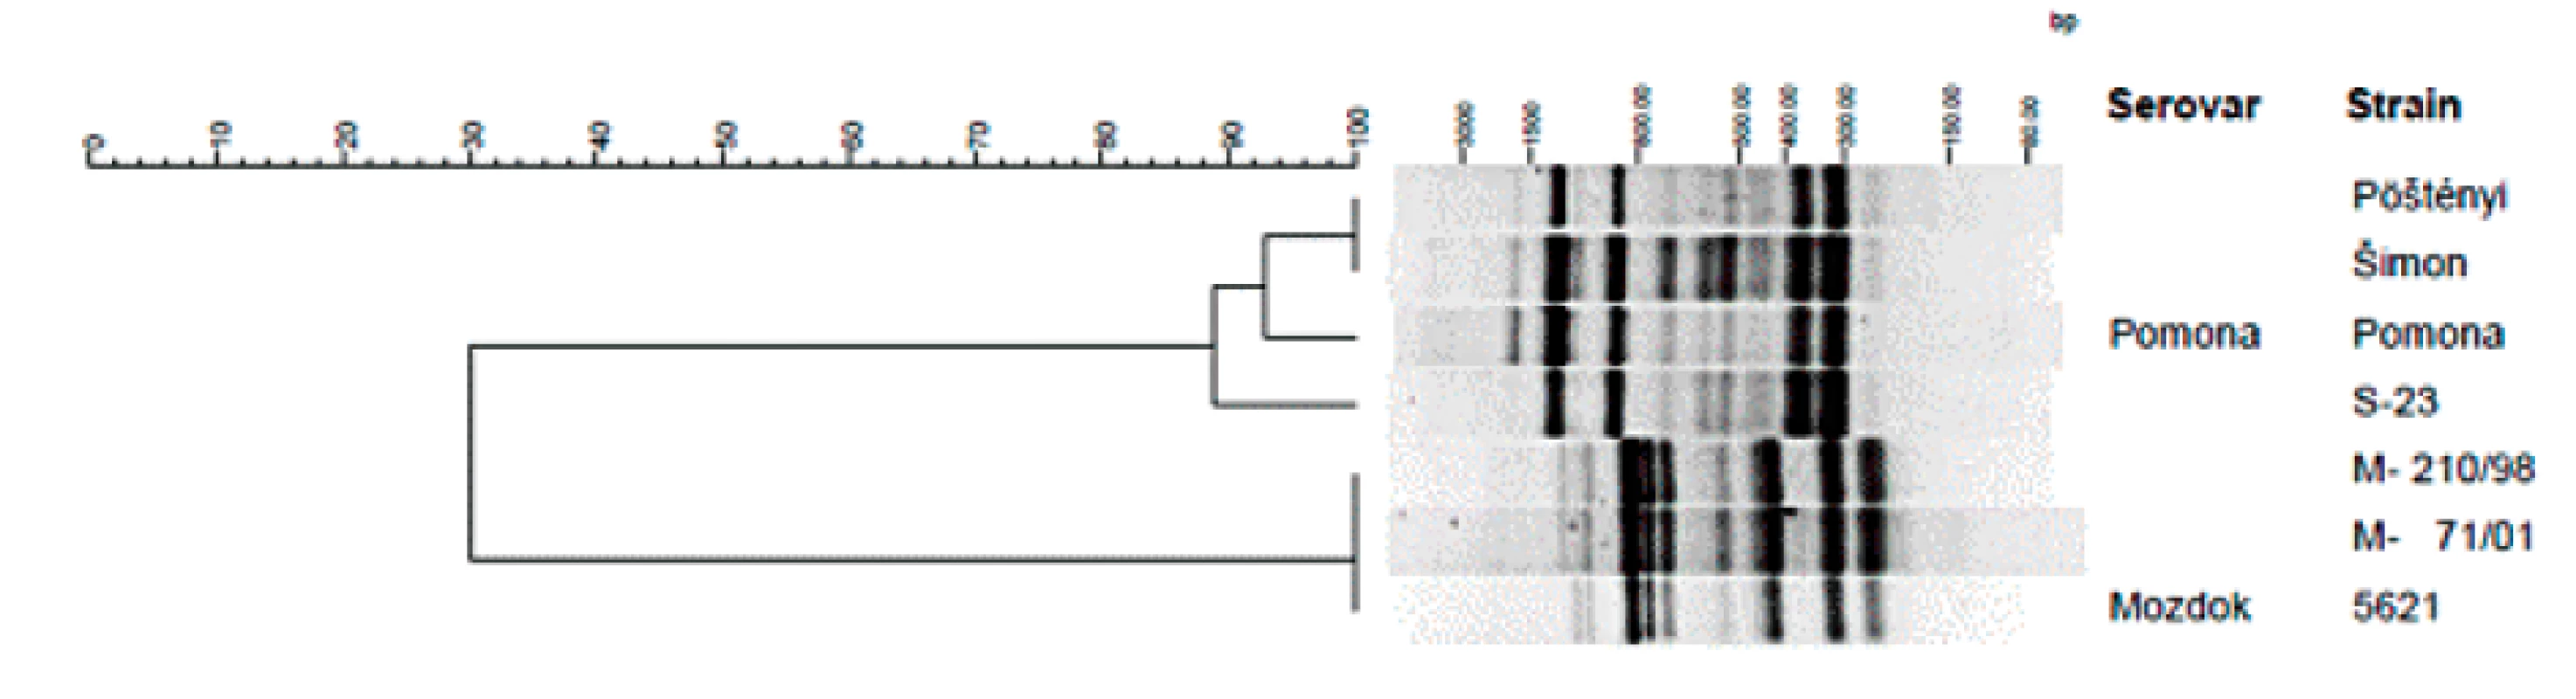 DNA fingerprints and relatedness between reference and endemic Leptospira strains of serovars Mozdok and Pomona (serogroup
Pomona)